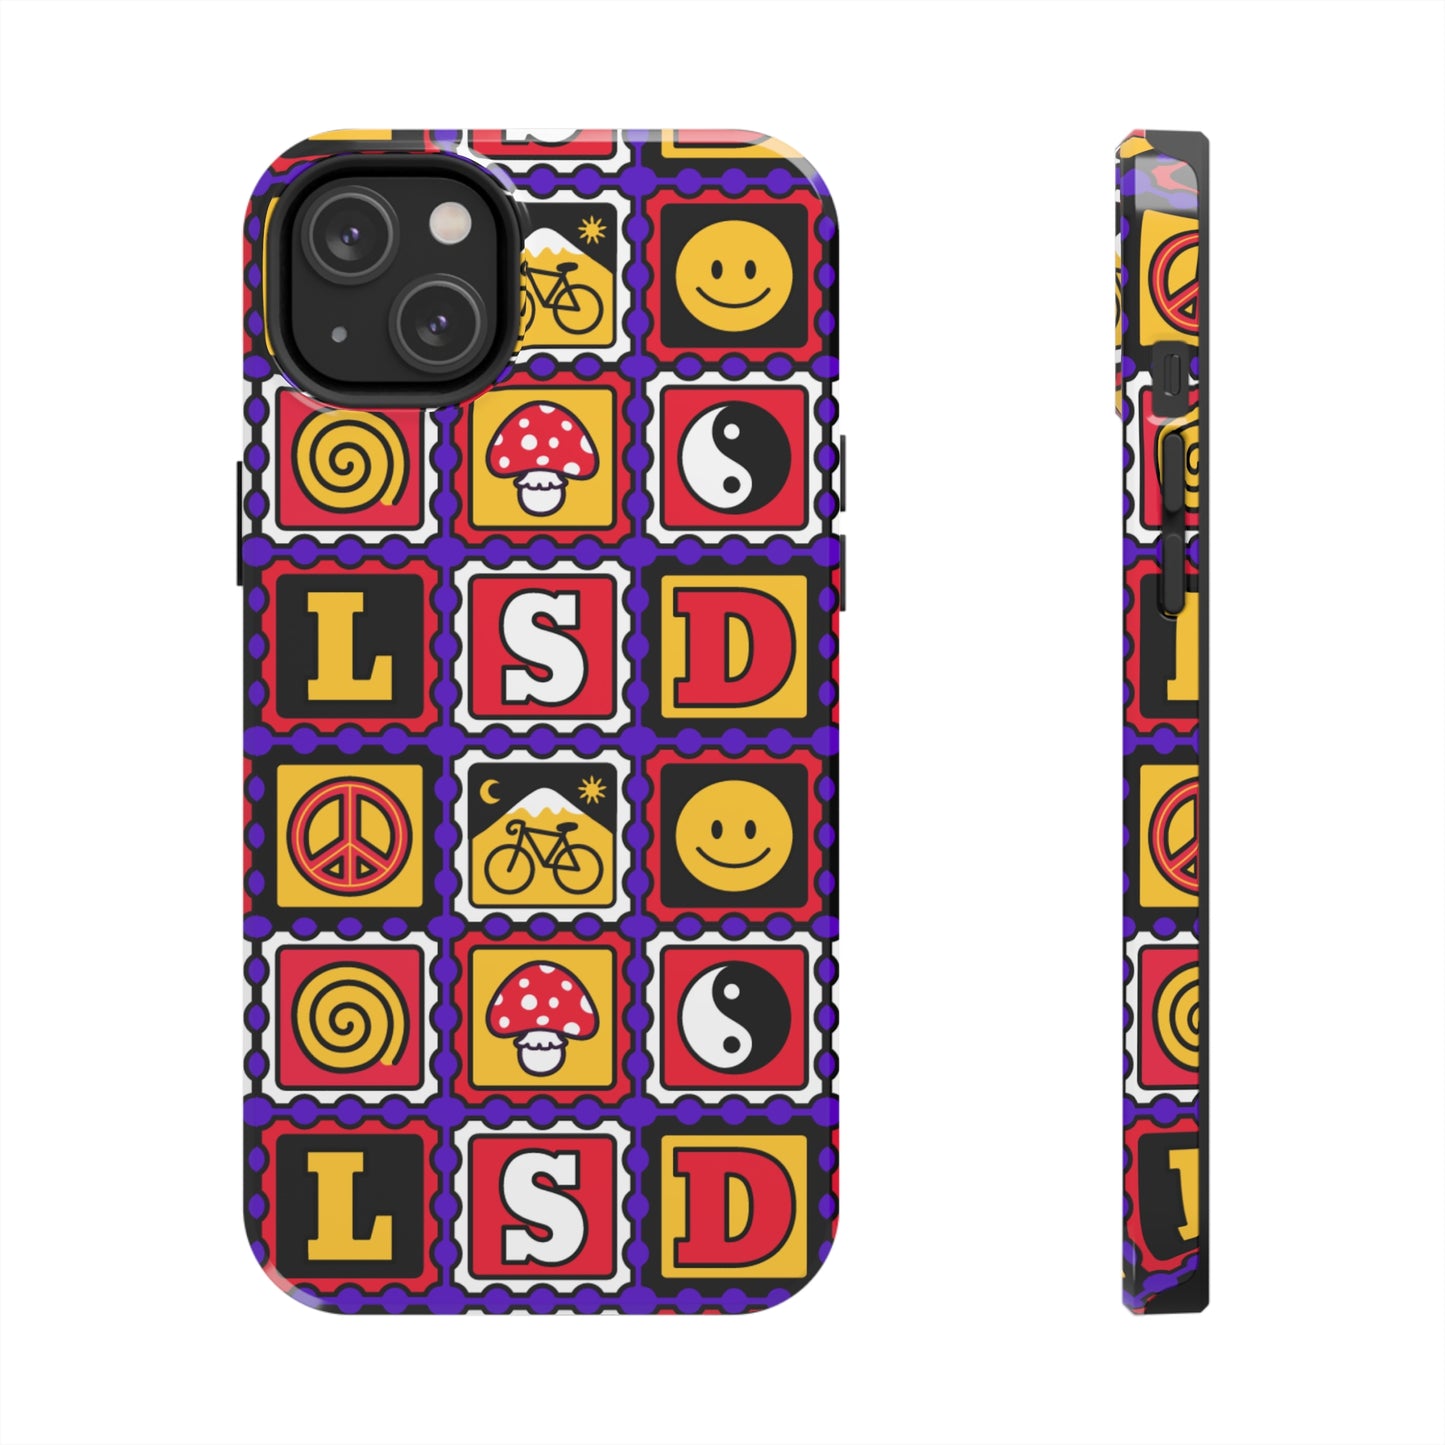 LSD Ticket iPhone Case